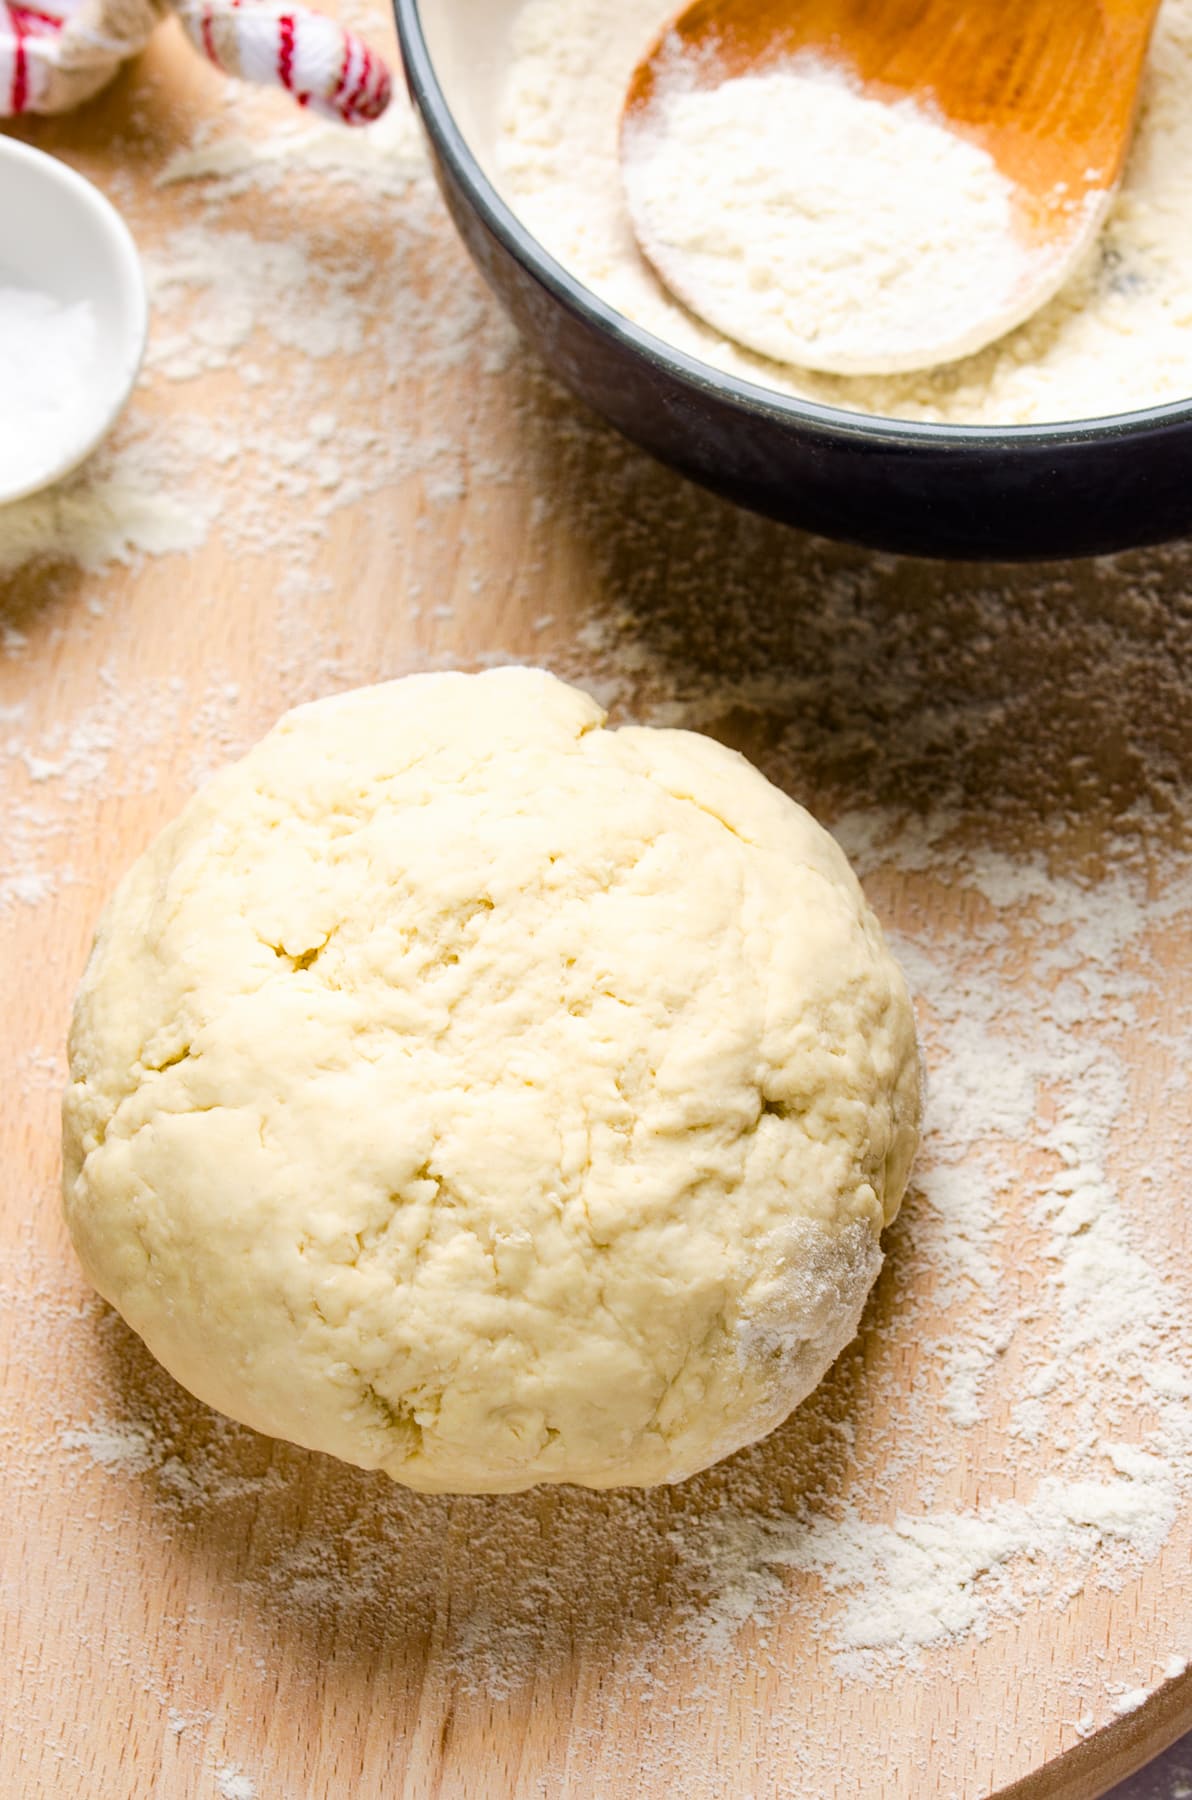 A ball of homemade dough on a wooden surface.